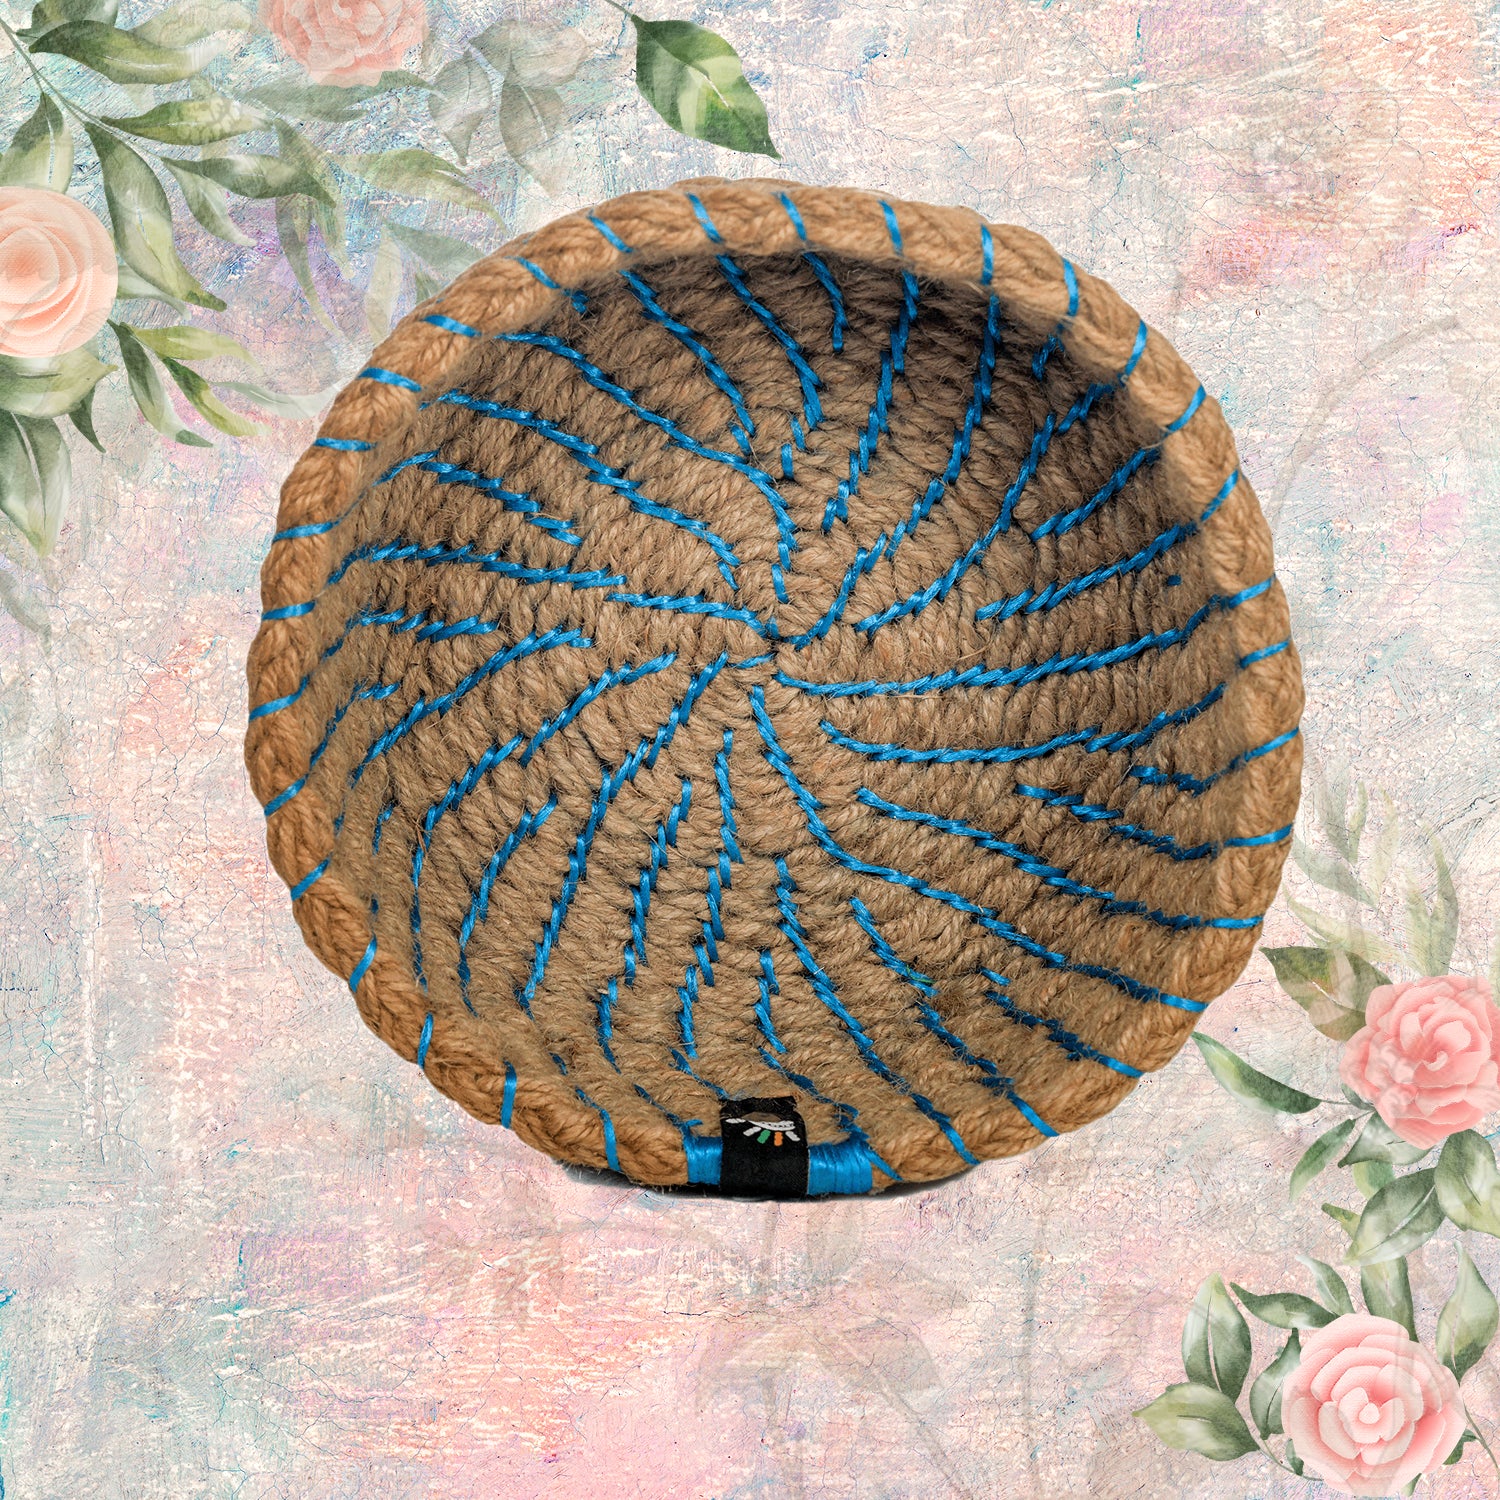 Happy Cultures 'Blue' Jute Braided Basket